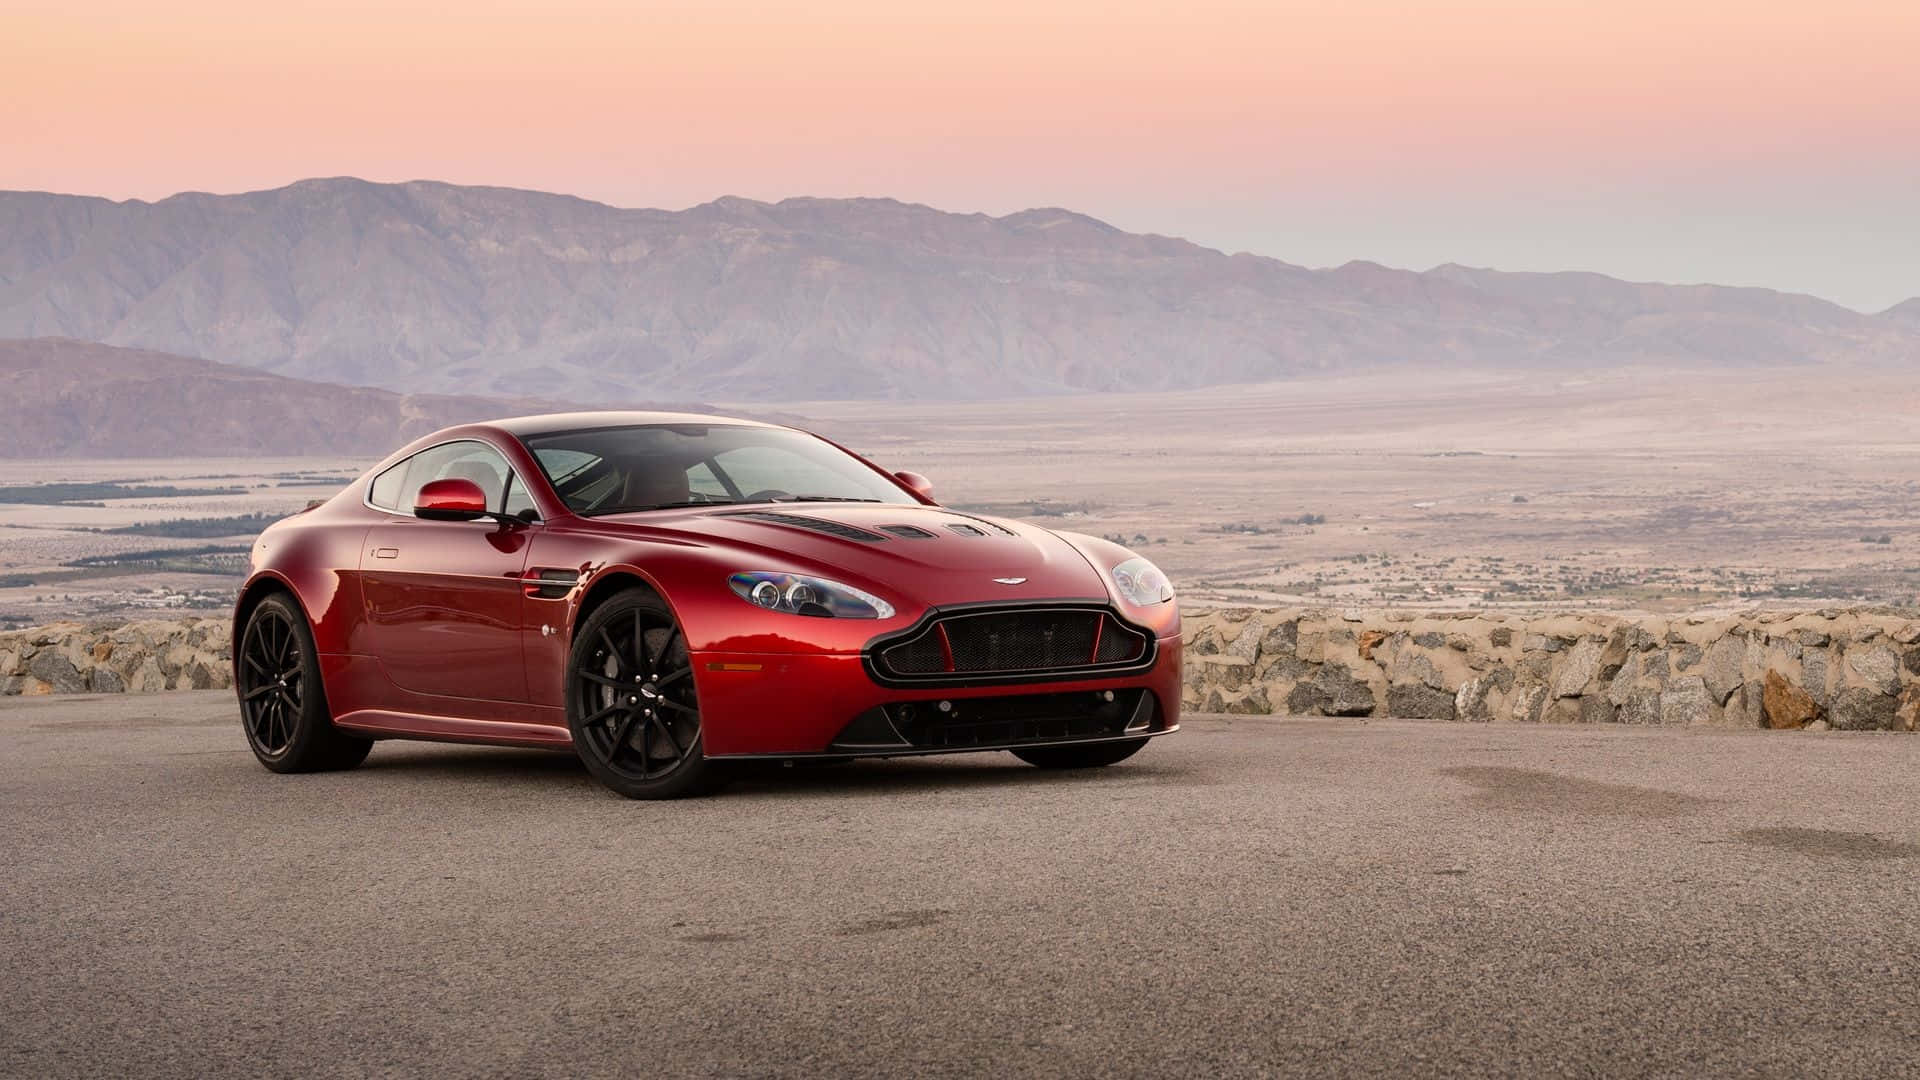 Aston Martin V12 Vantage: A striking fusion of power&luxury Wallpaper